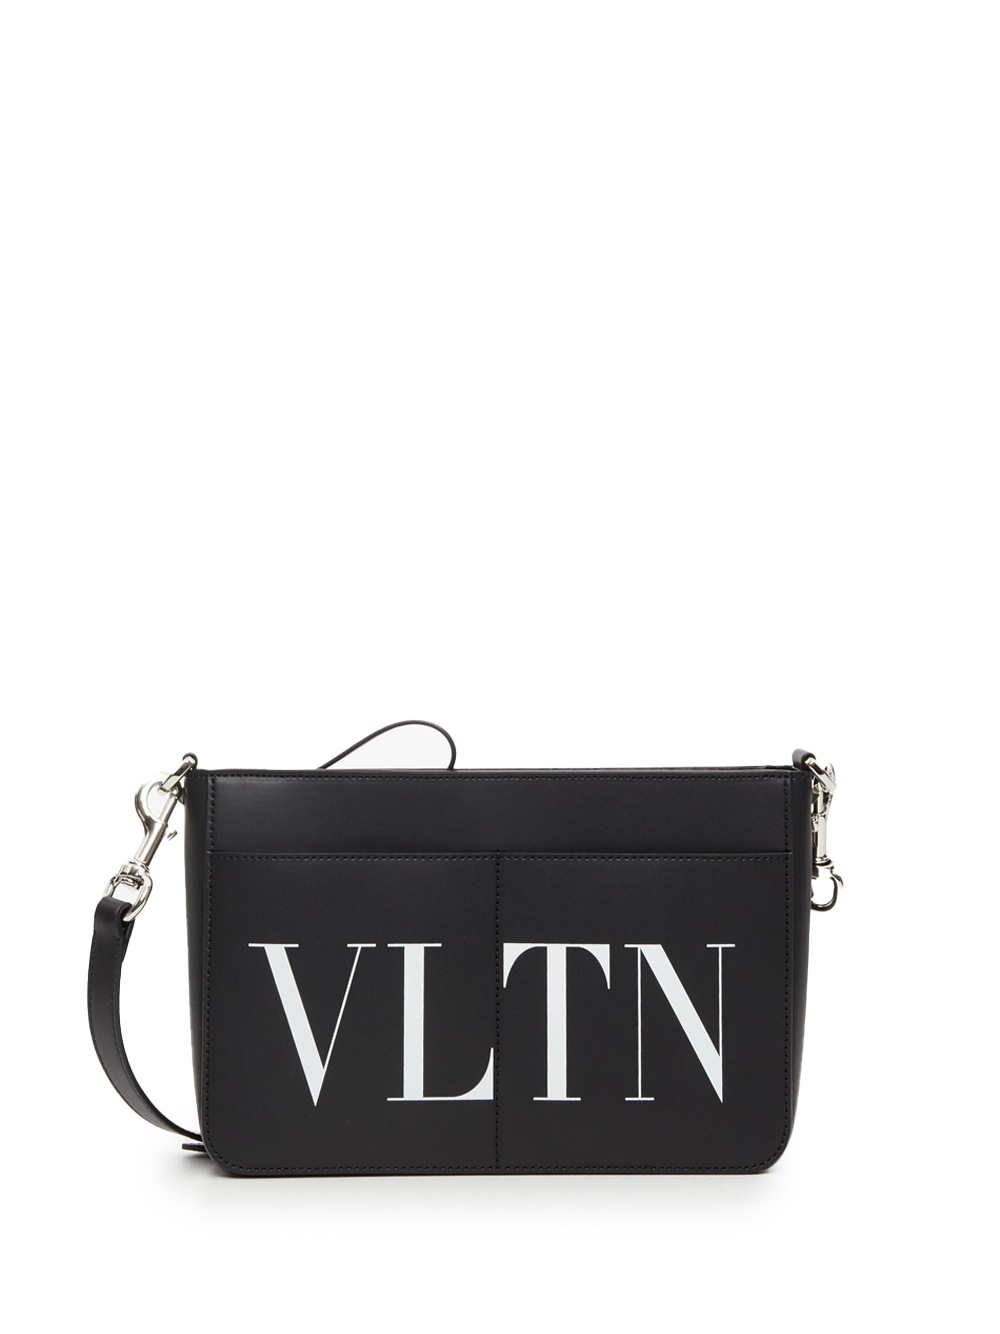 VLTN Cross Body Bag in Schwarz